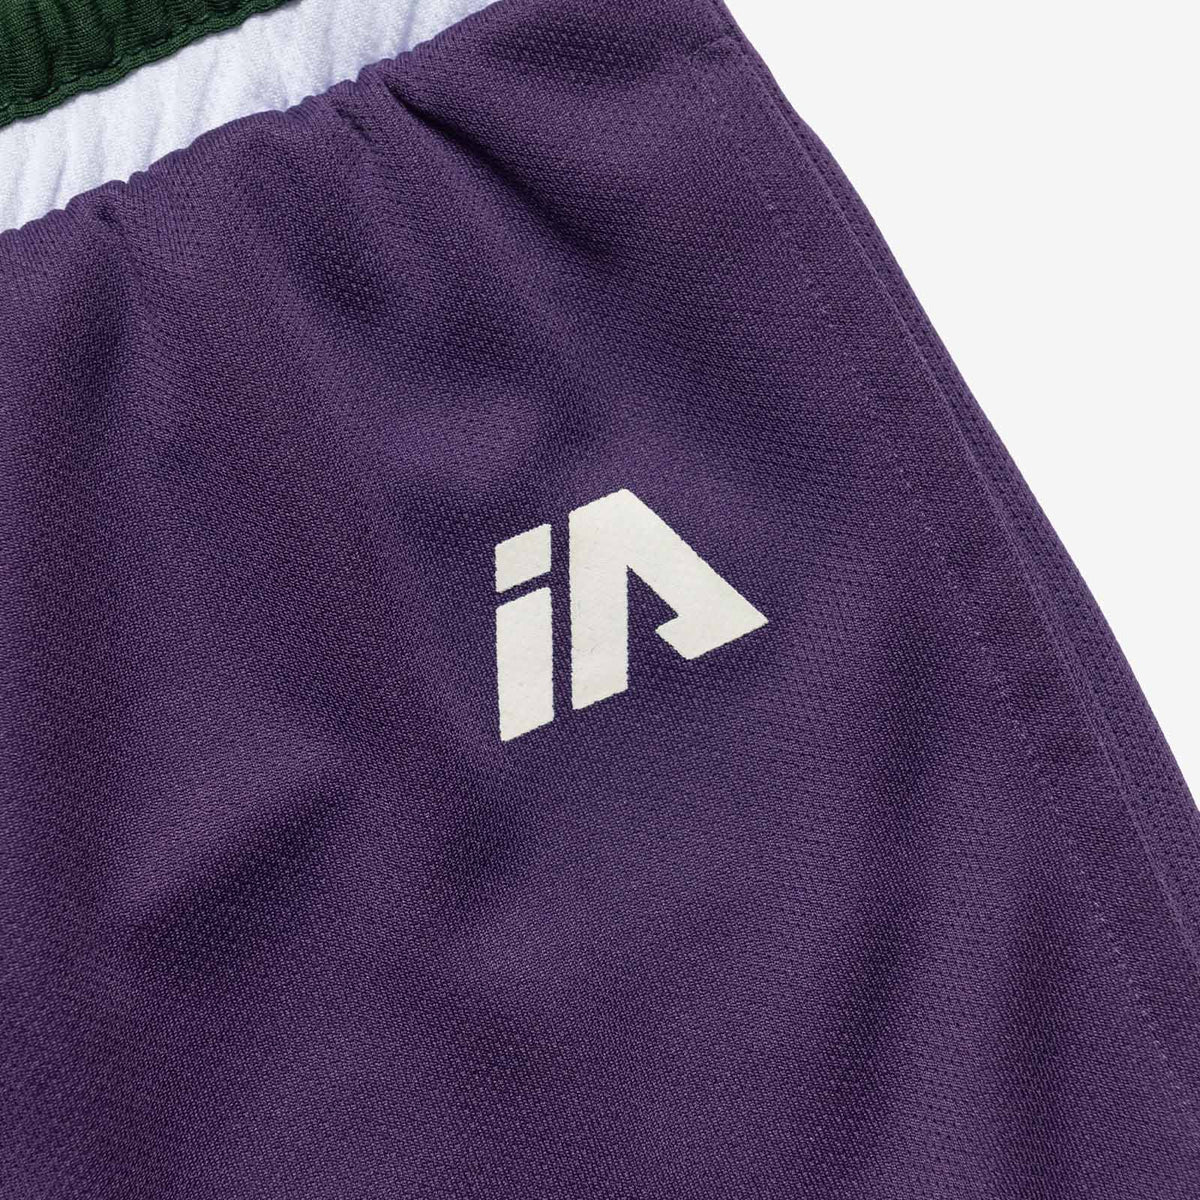 Basketball Pocket Women’s Shorts - Purple